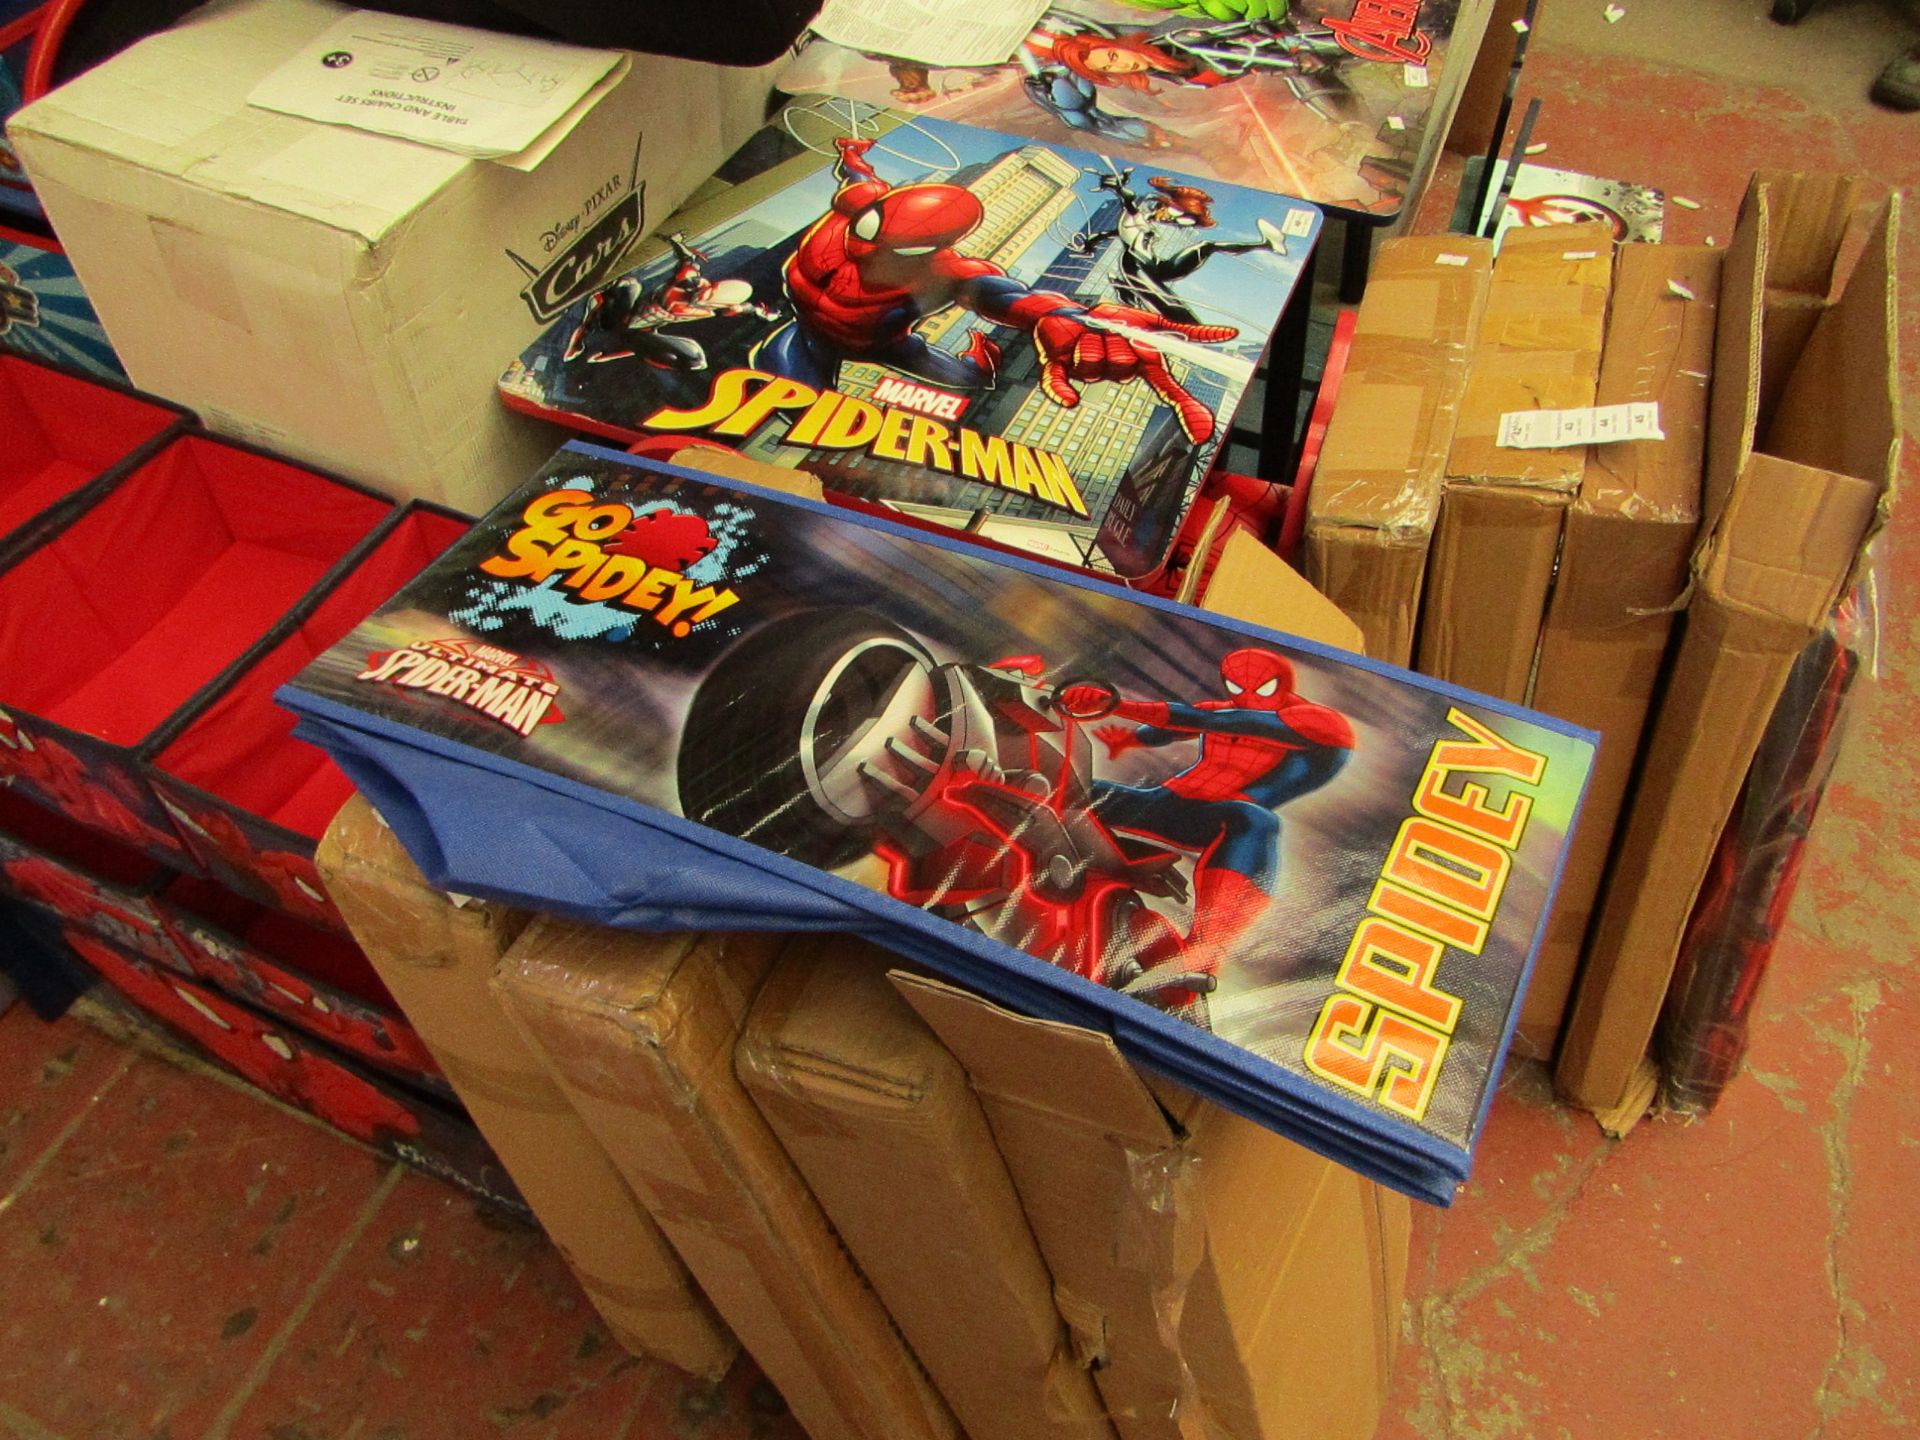 Spider-Man - Wooden Toy Storage Organizer - Box Unchecked but looks Complete.